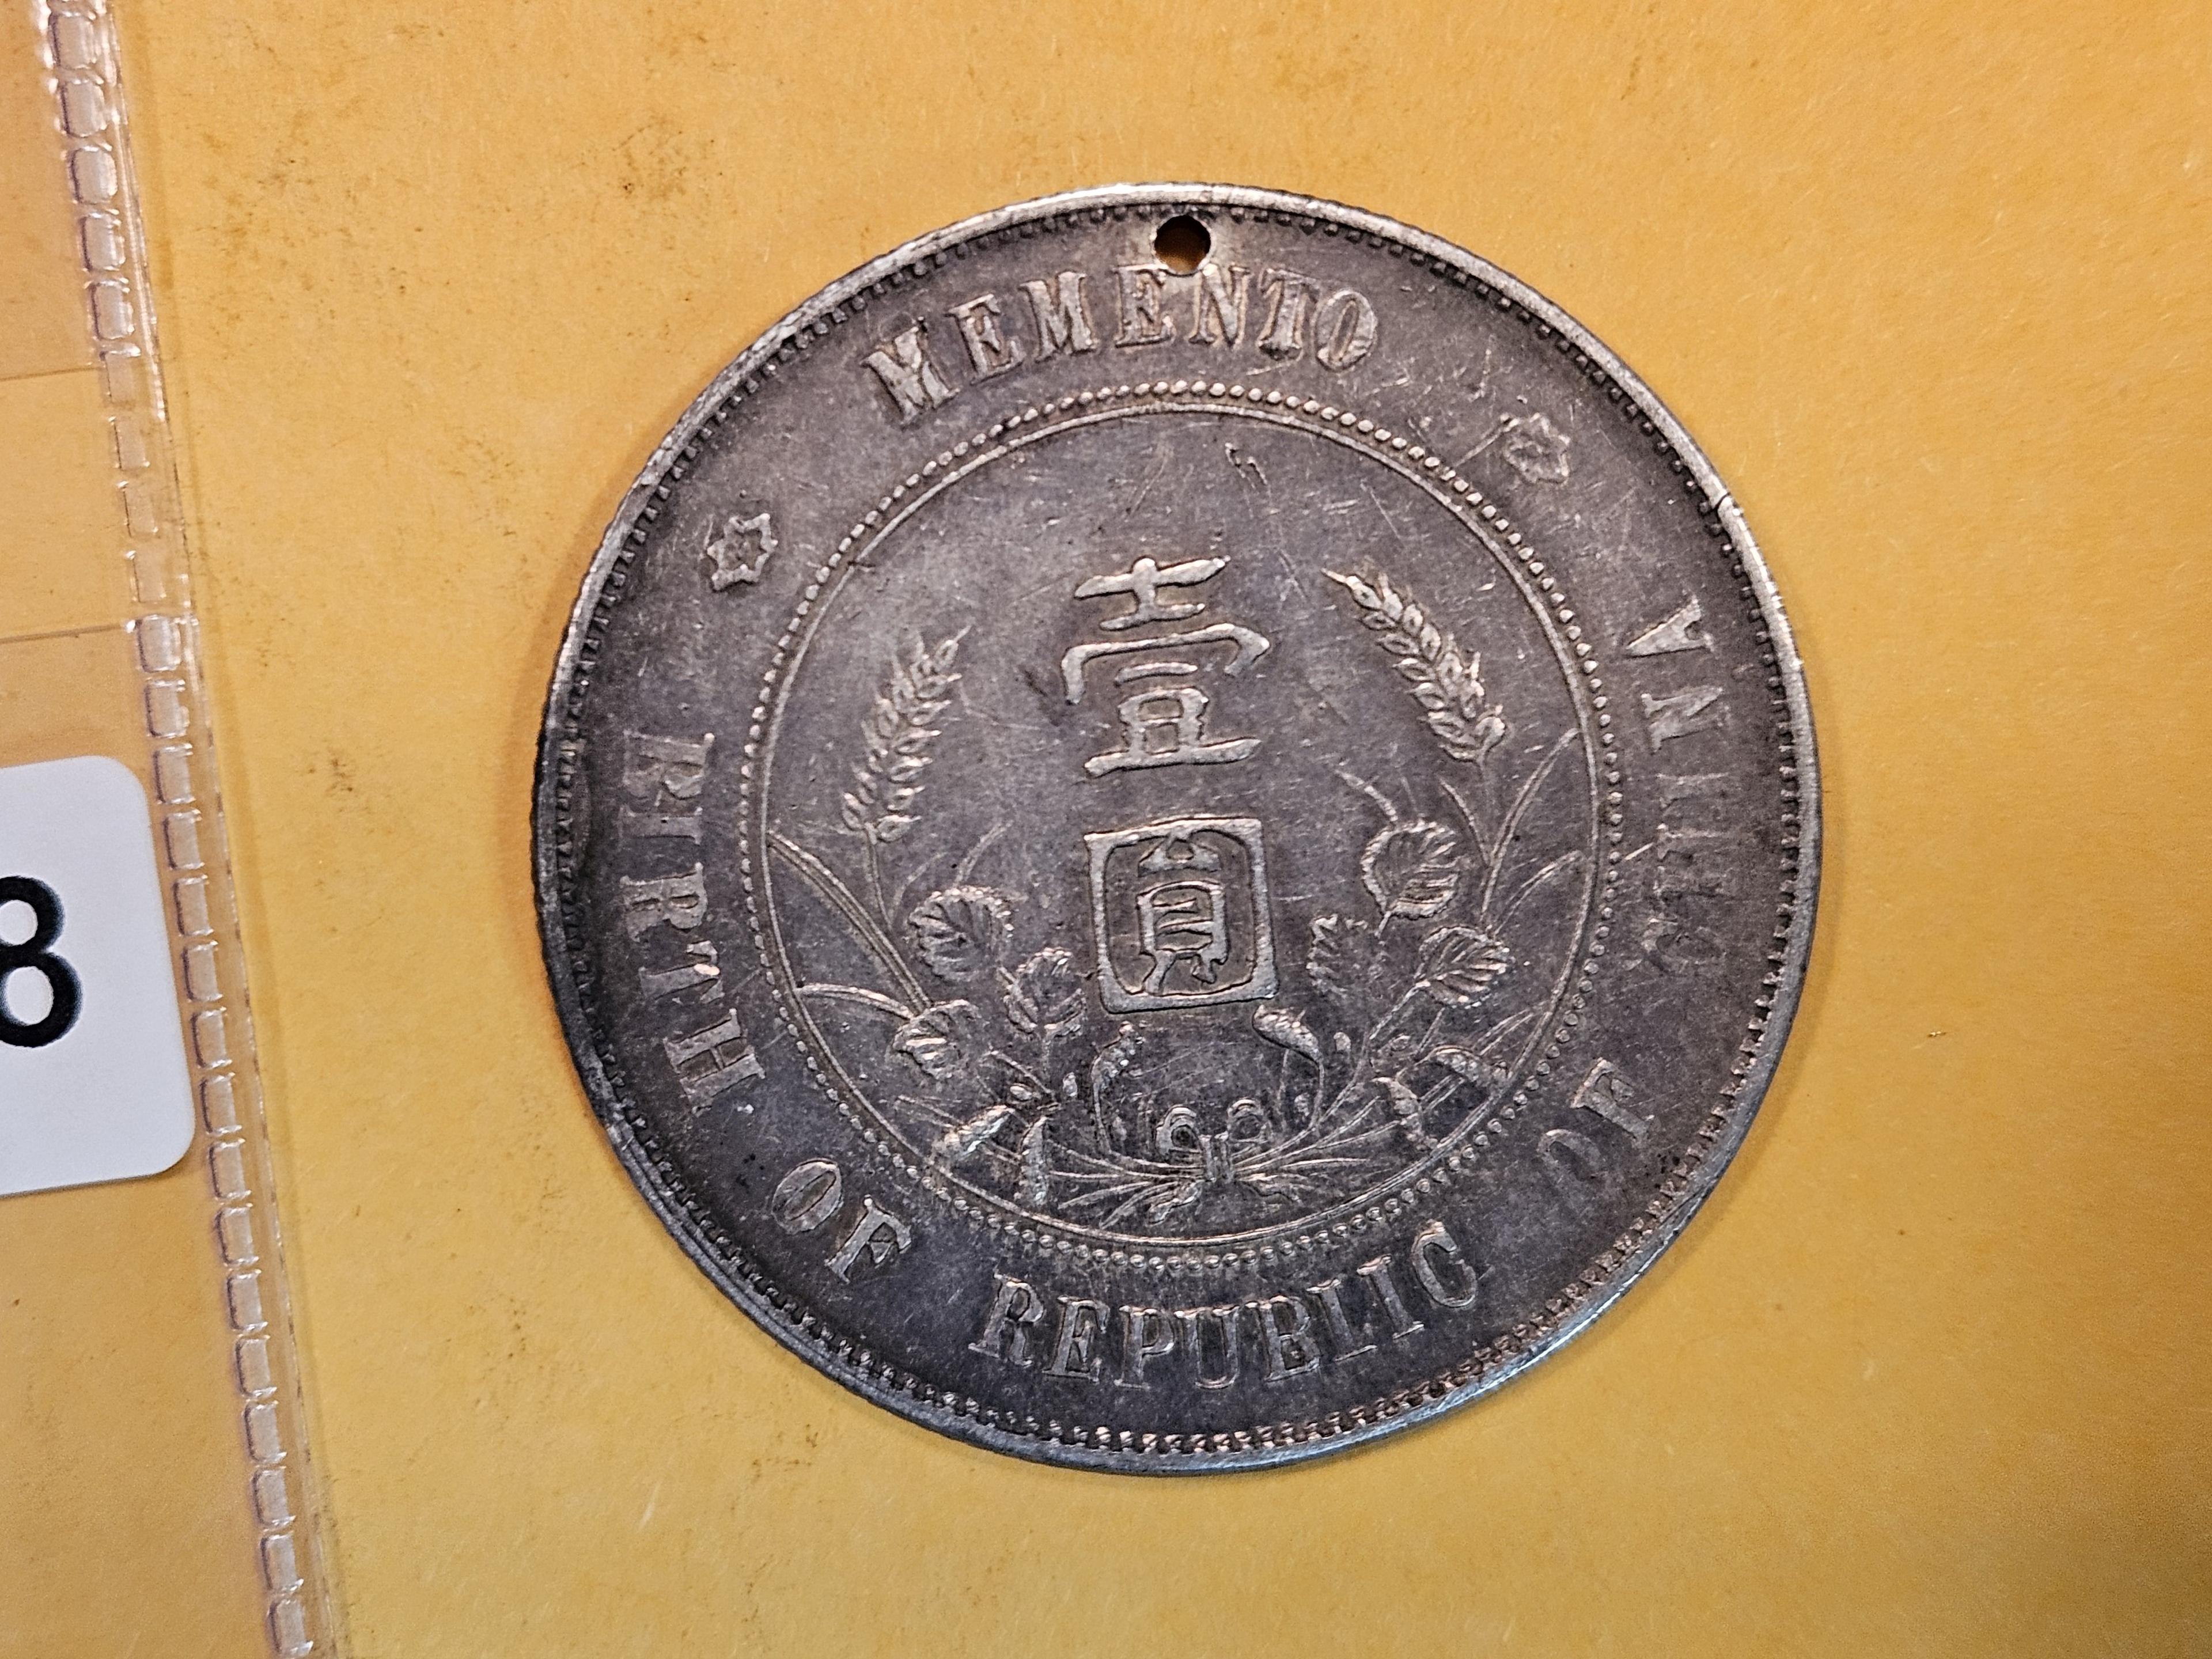 Chinese Memento Silver Dollar